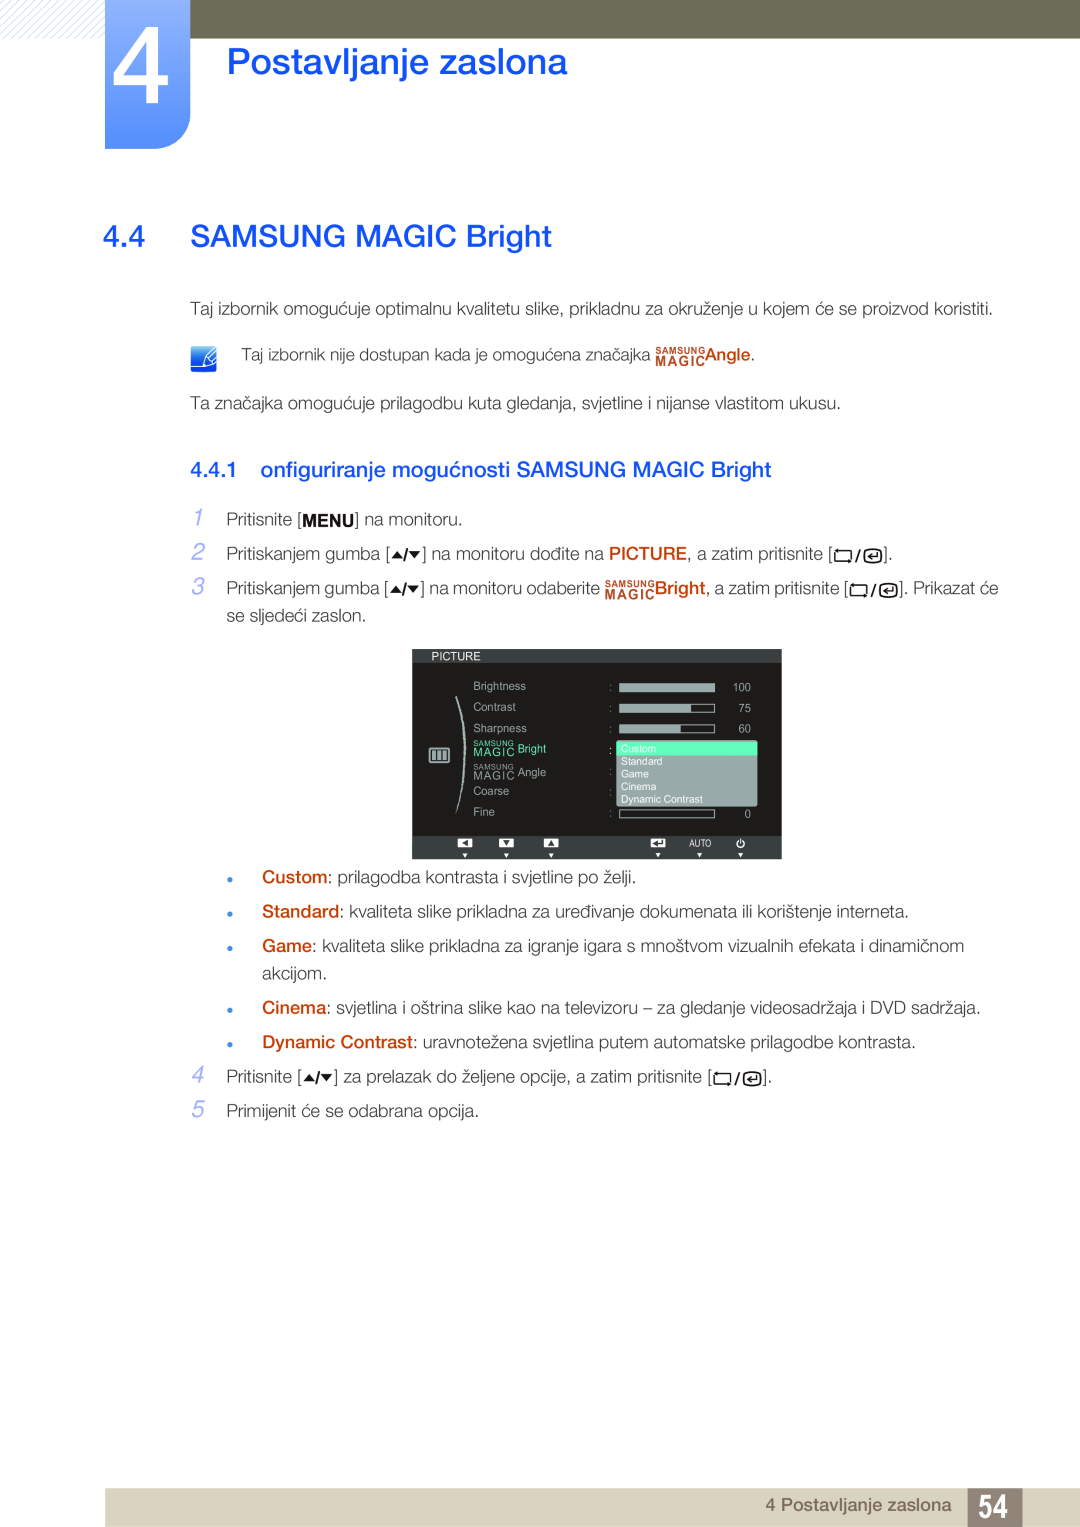 Samsung LF24TSWTBDN/EN, LF19TSWTBDN/EN manual onfiguriranje mogućnosti SAMSUNG MAGIC Bright, Postavljanje zaslona 